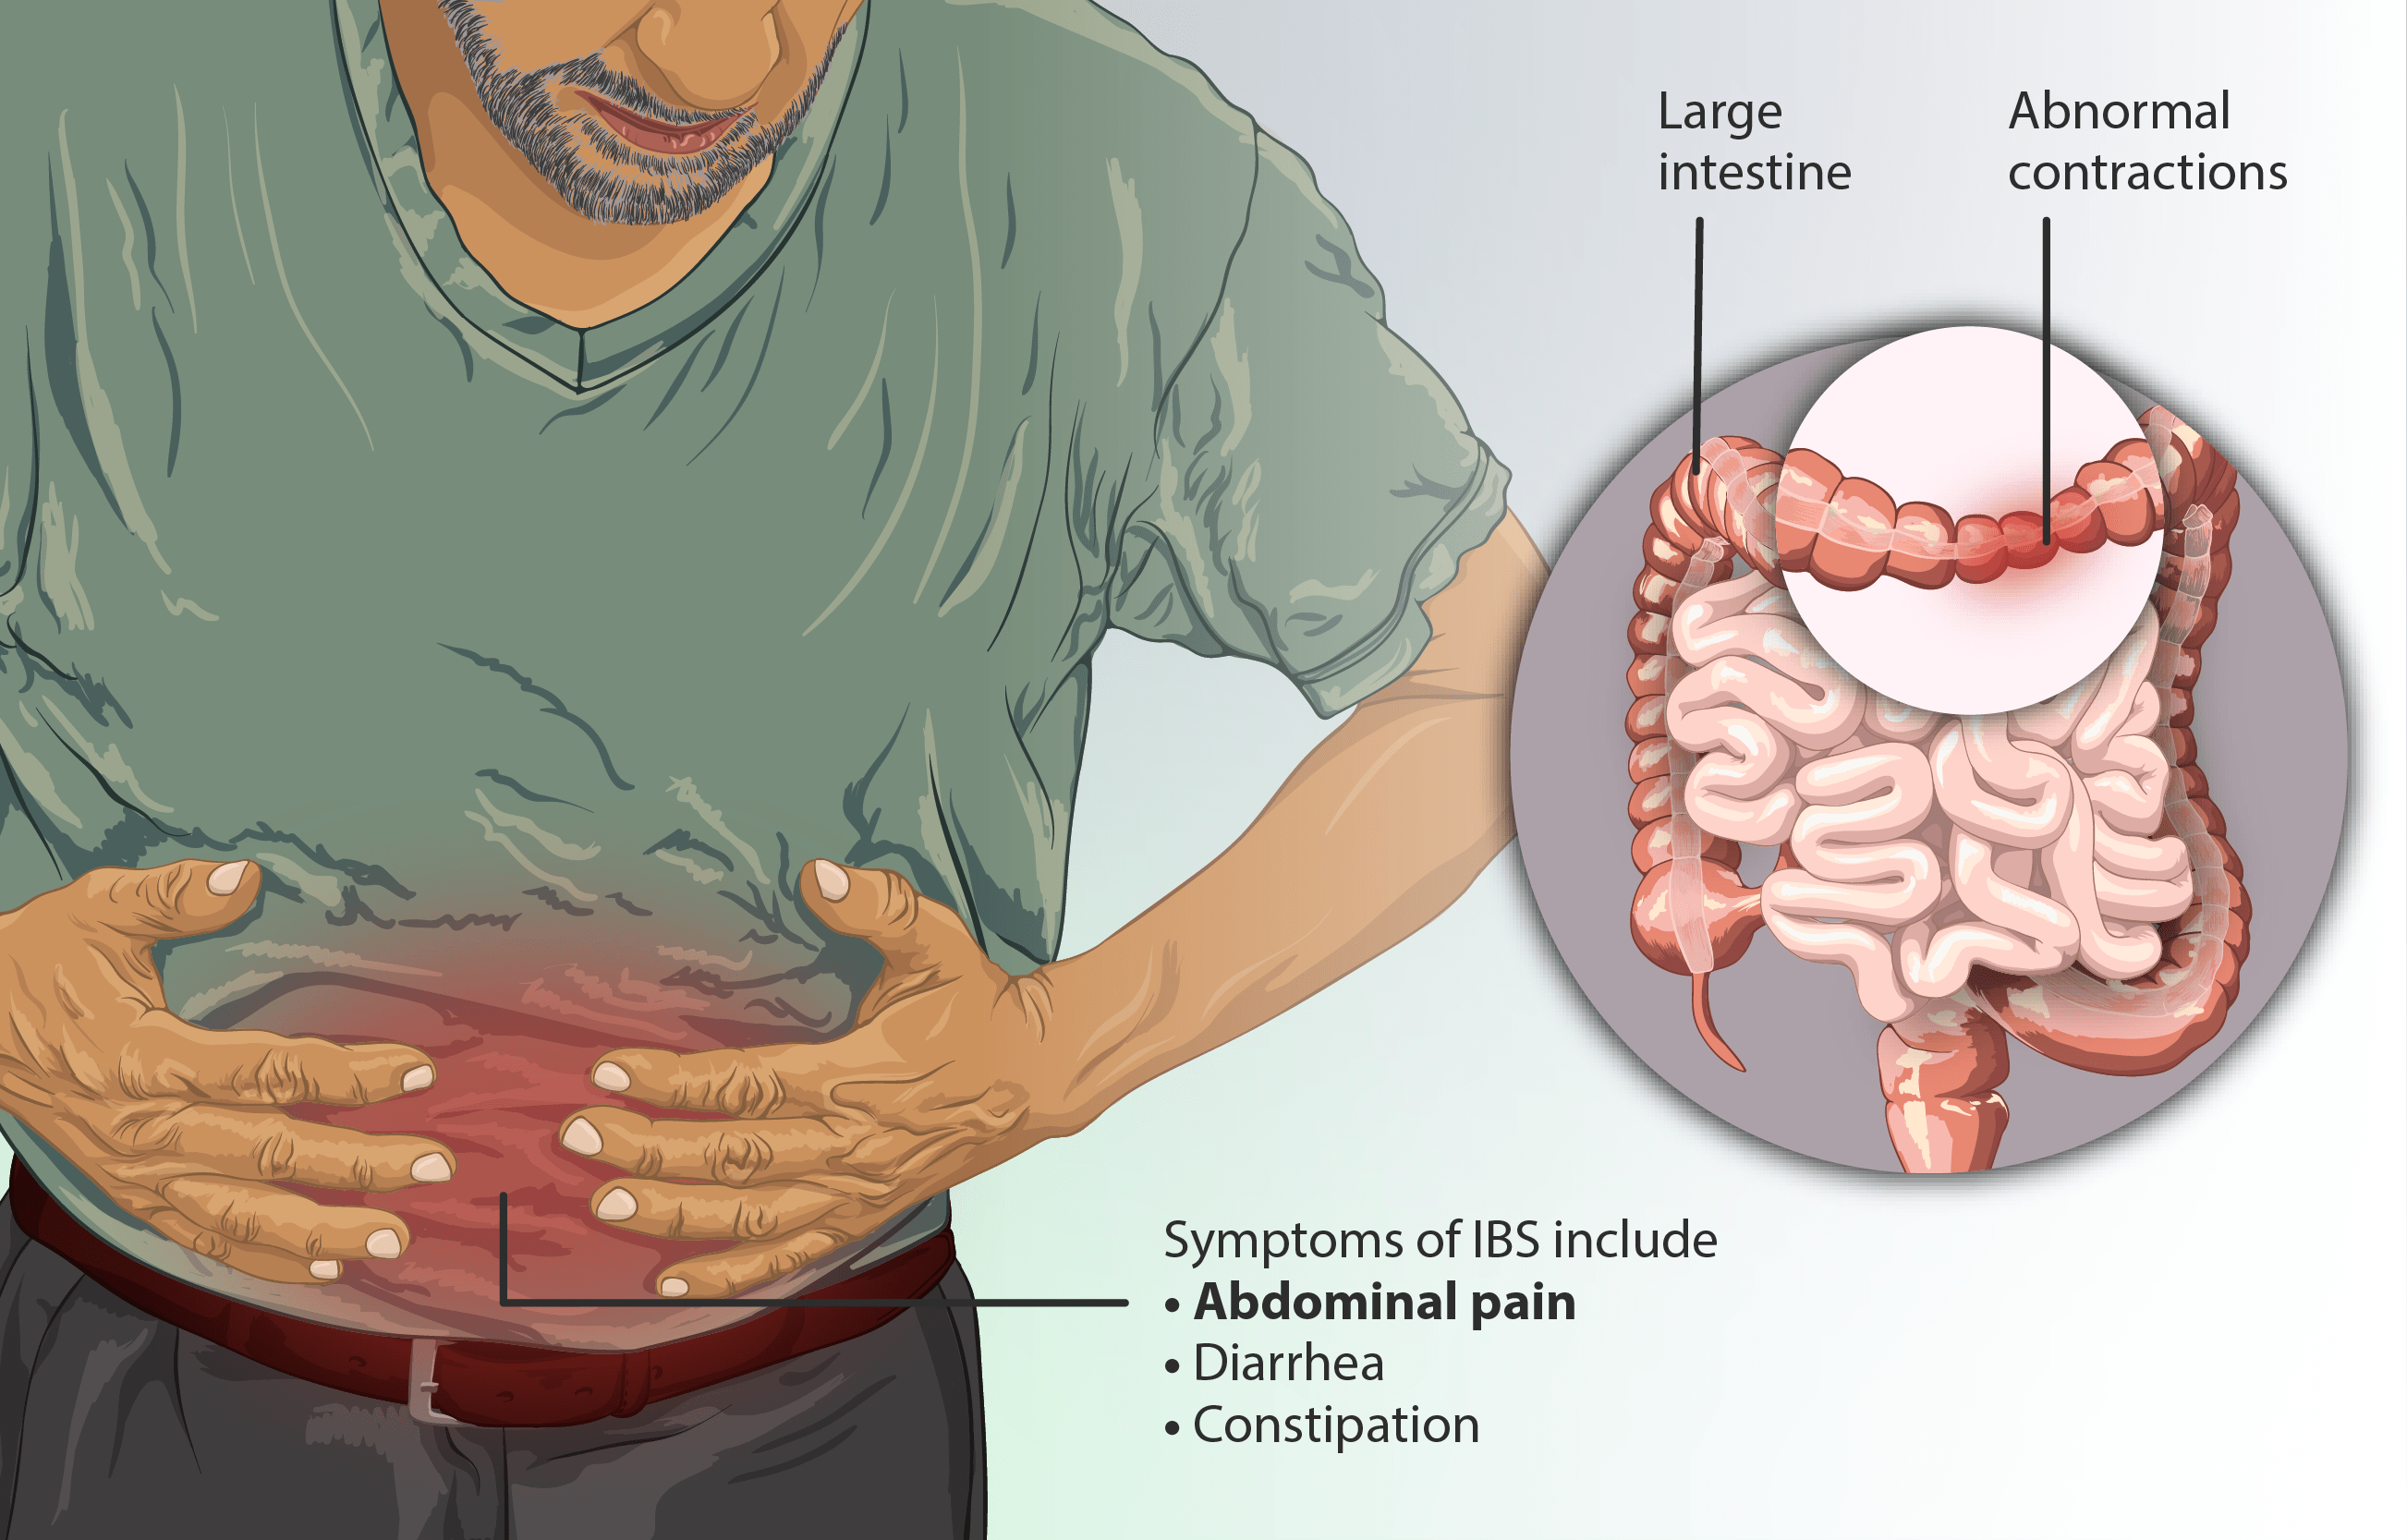 Depiction of a person suffering from Irritable Bowel Syndrome IBS القولون العصبي.. مرض مزمن أم حالة مؤقتة! مجلة نقطة العلمية